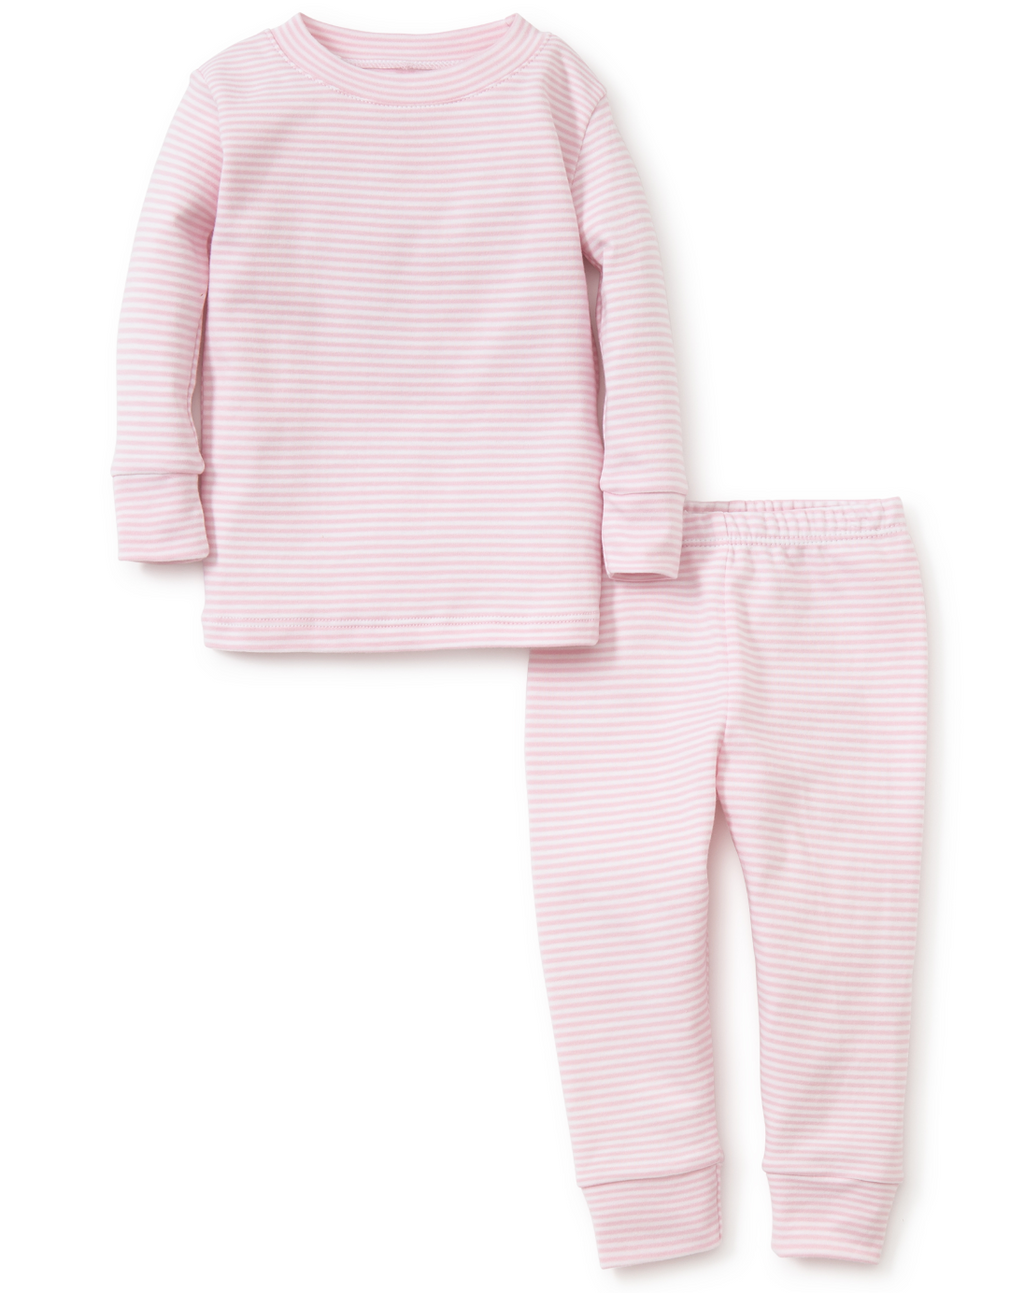 Kissy Kissy Simply Stripes Snugfit Pajama Set in Pink